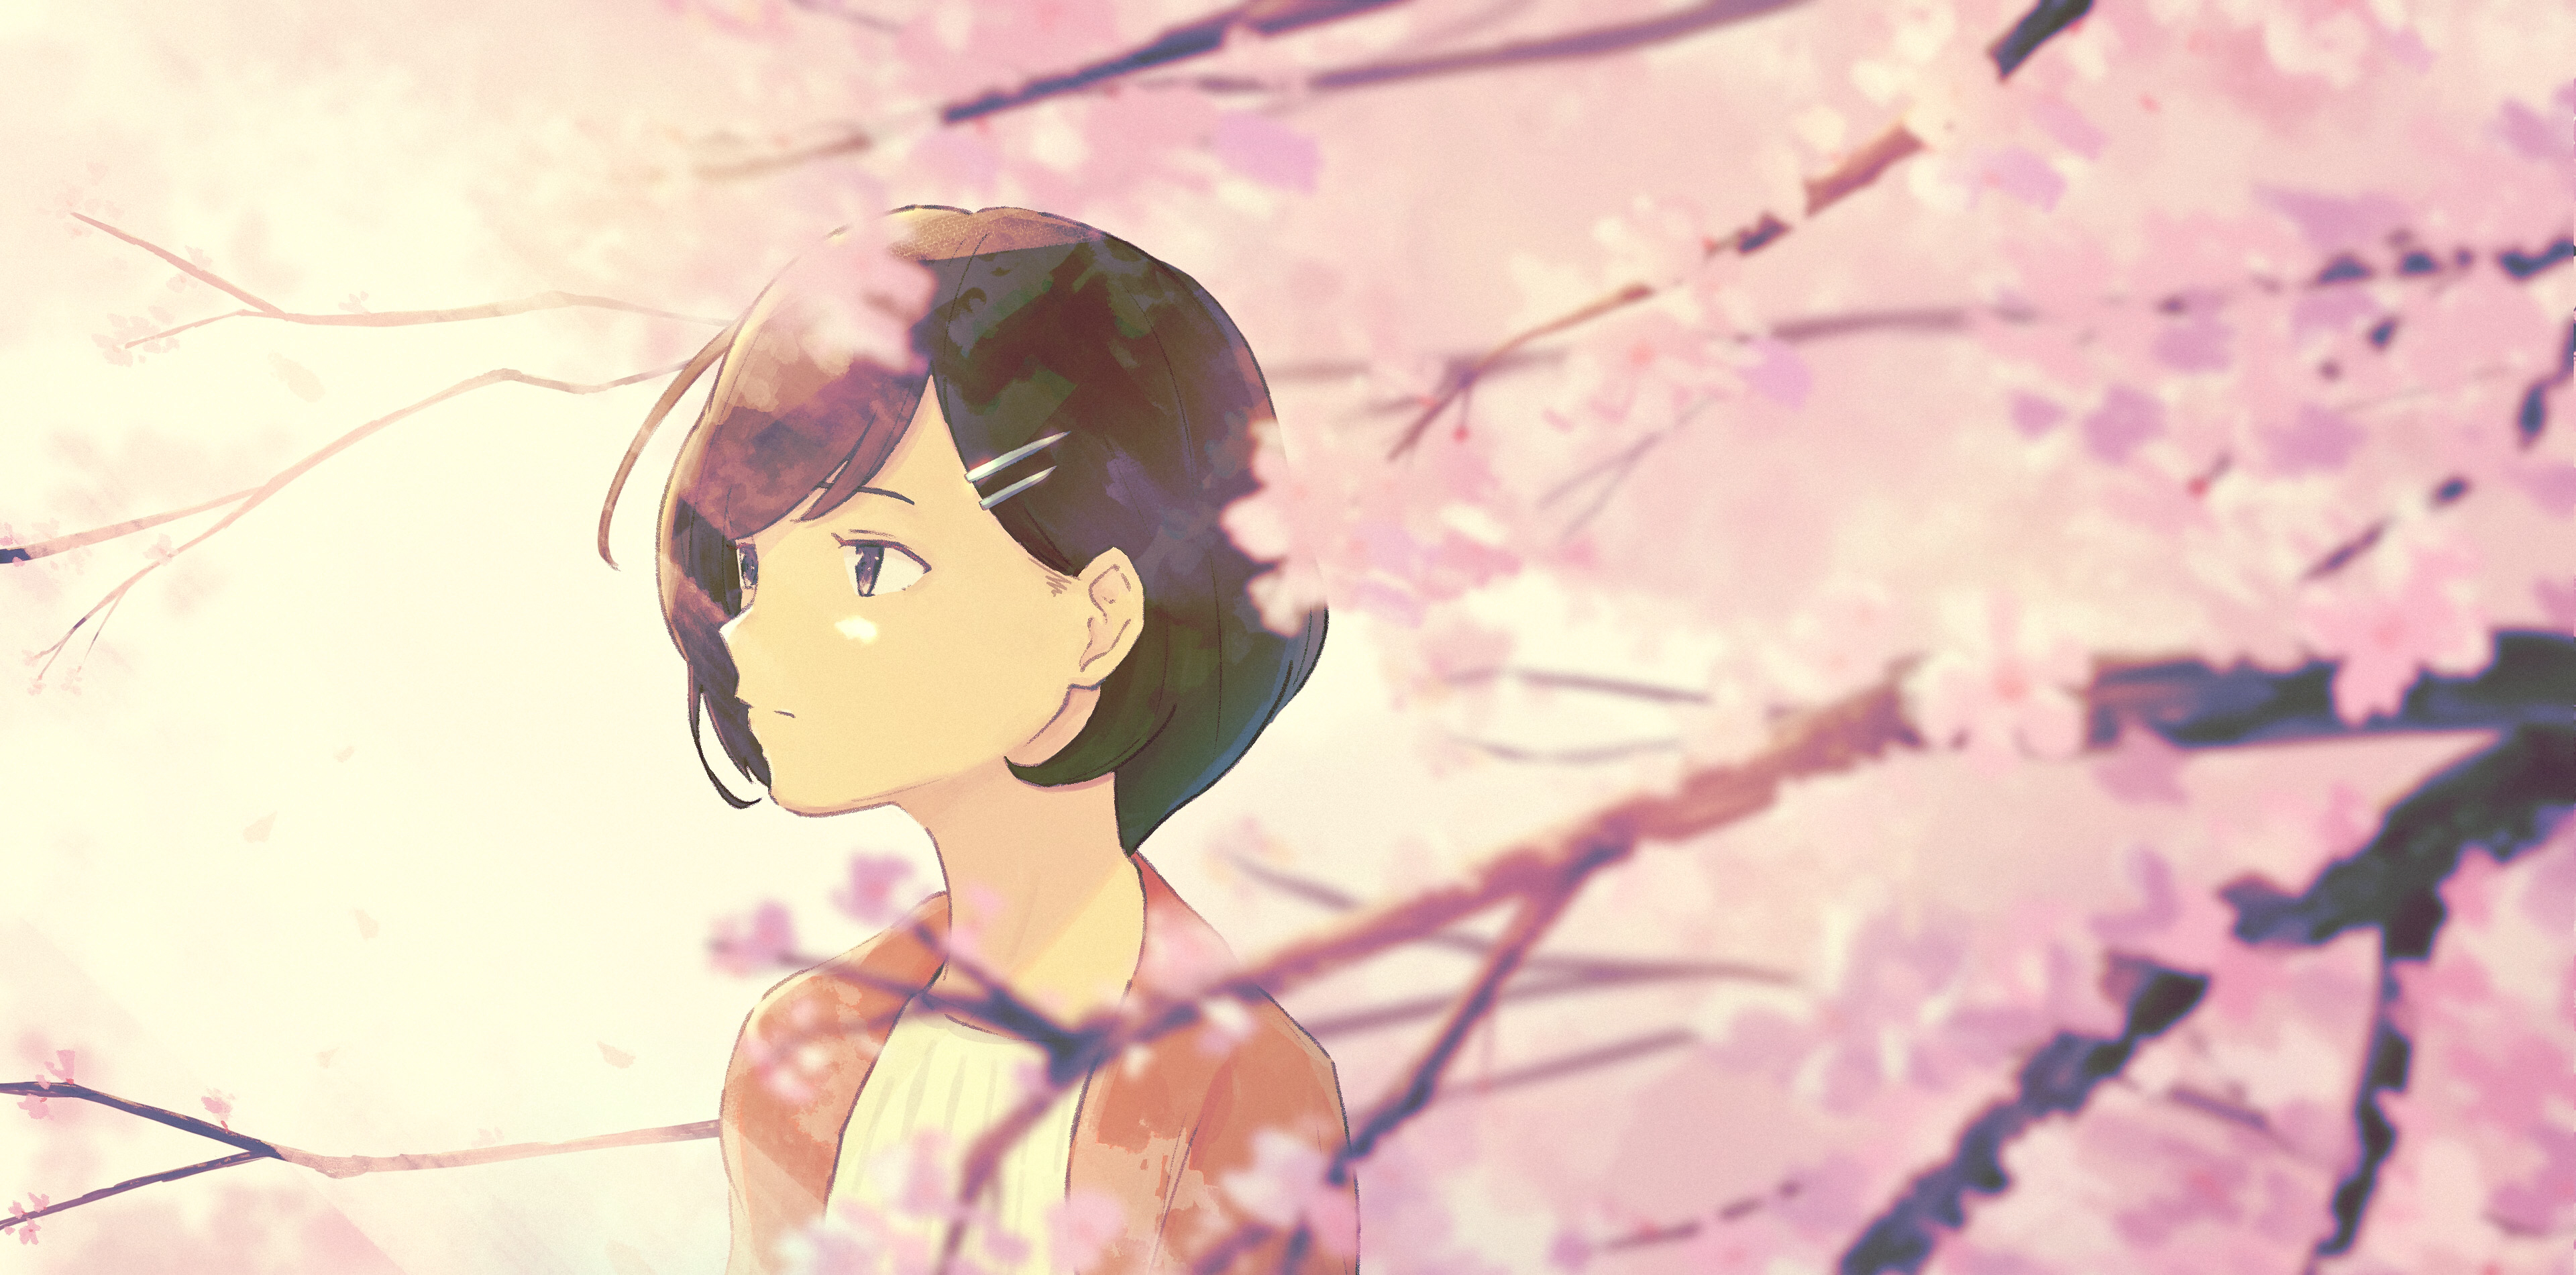 Oka Kojiro Illustration Anime Girls Women Cherry Blossom Looking At The Side Short Hair Pink Cherry  3840x1900